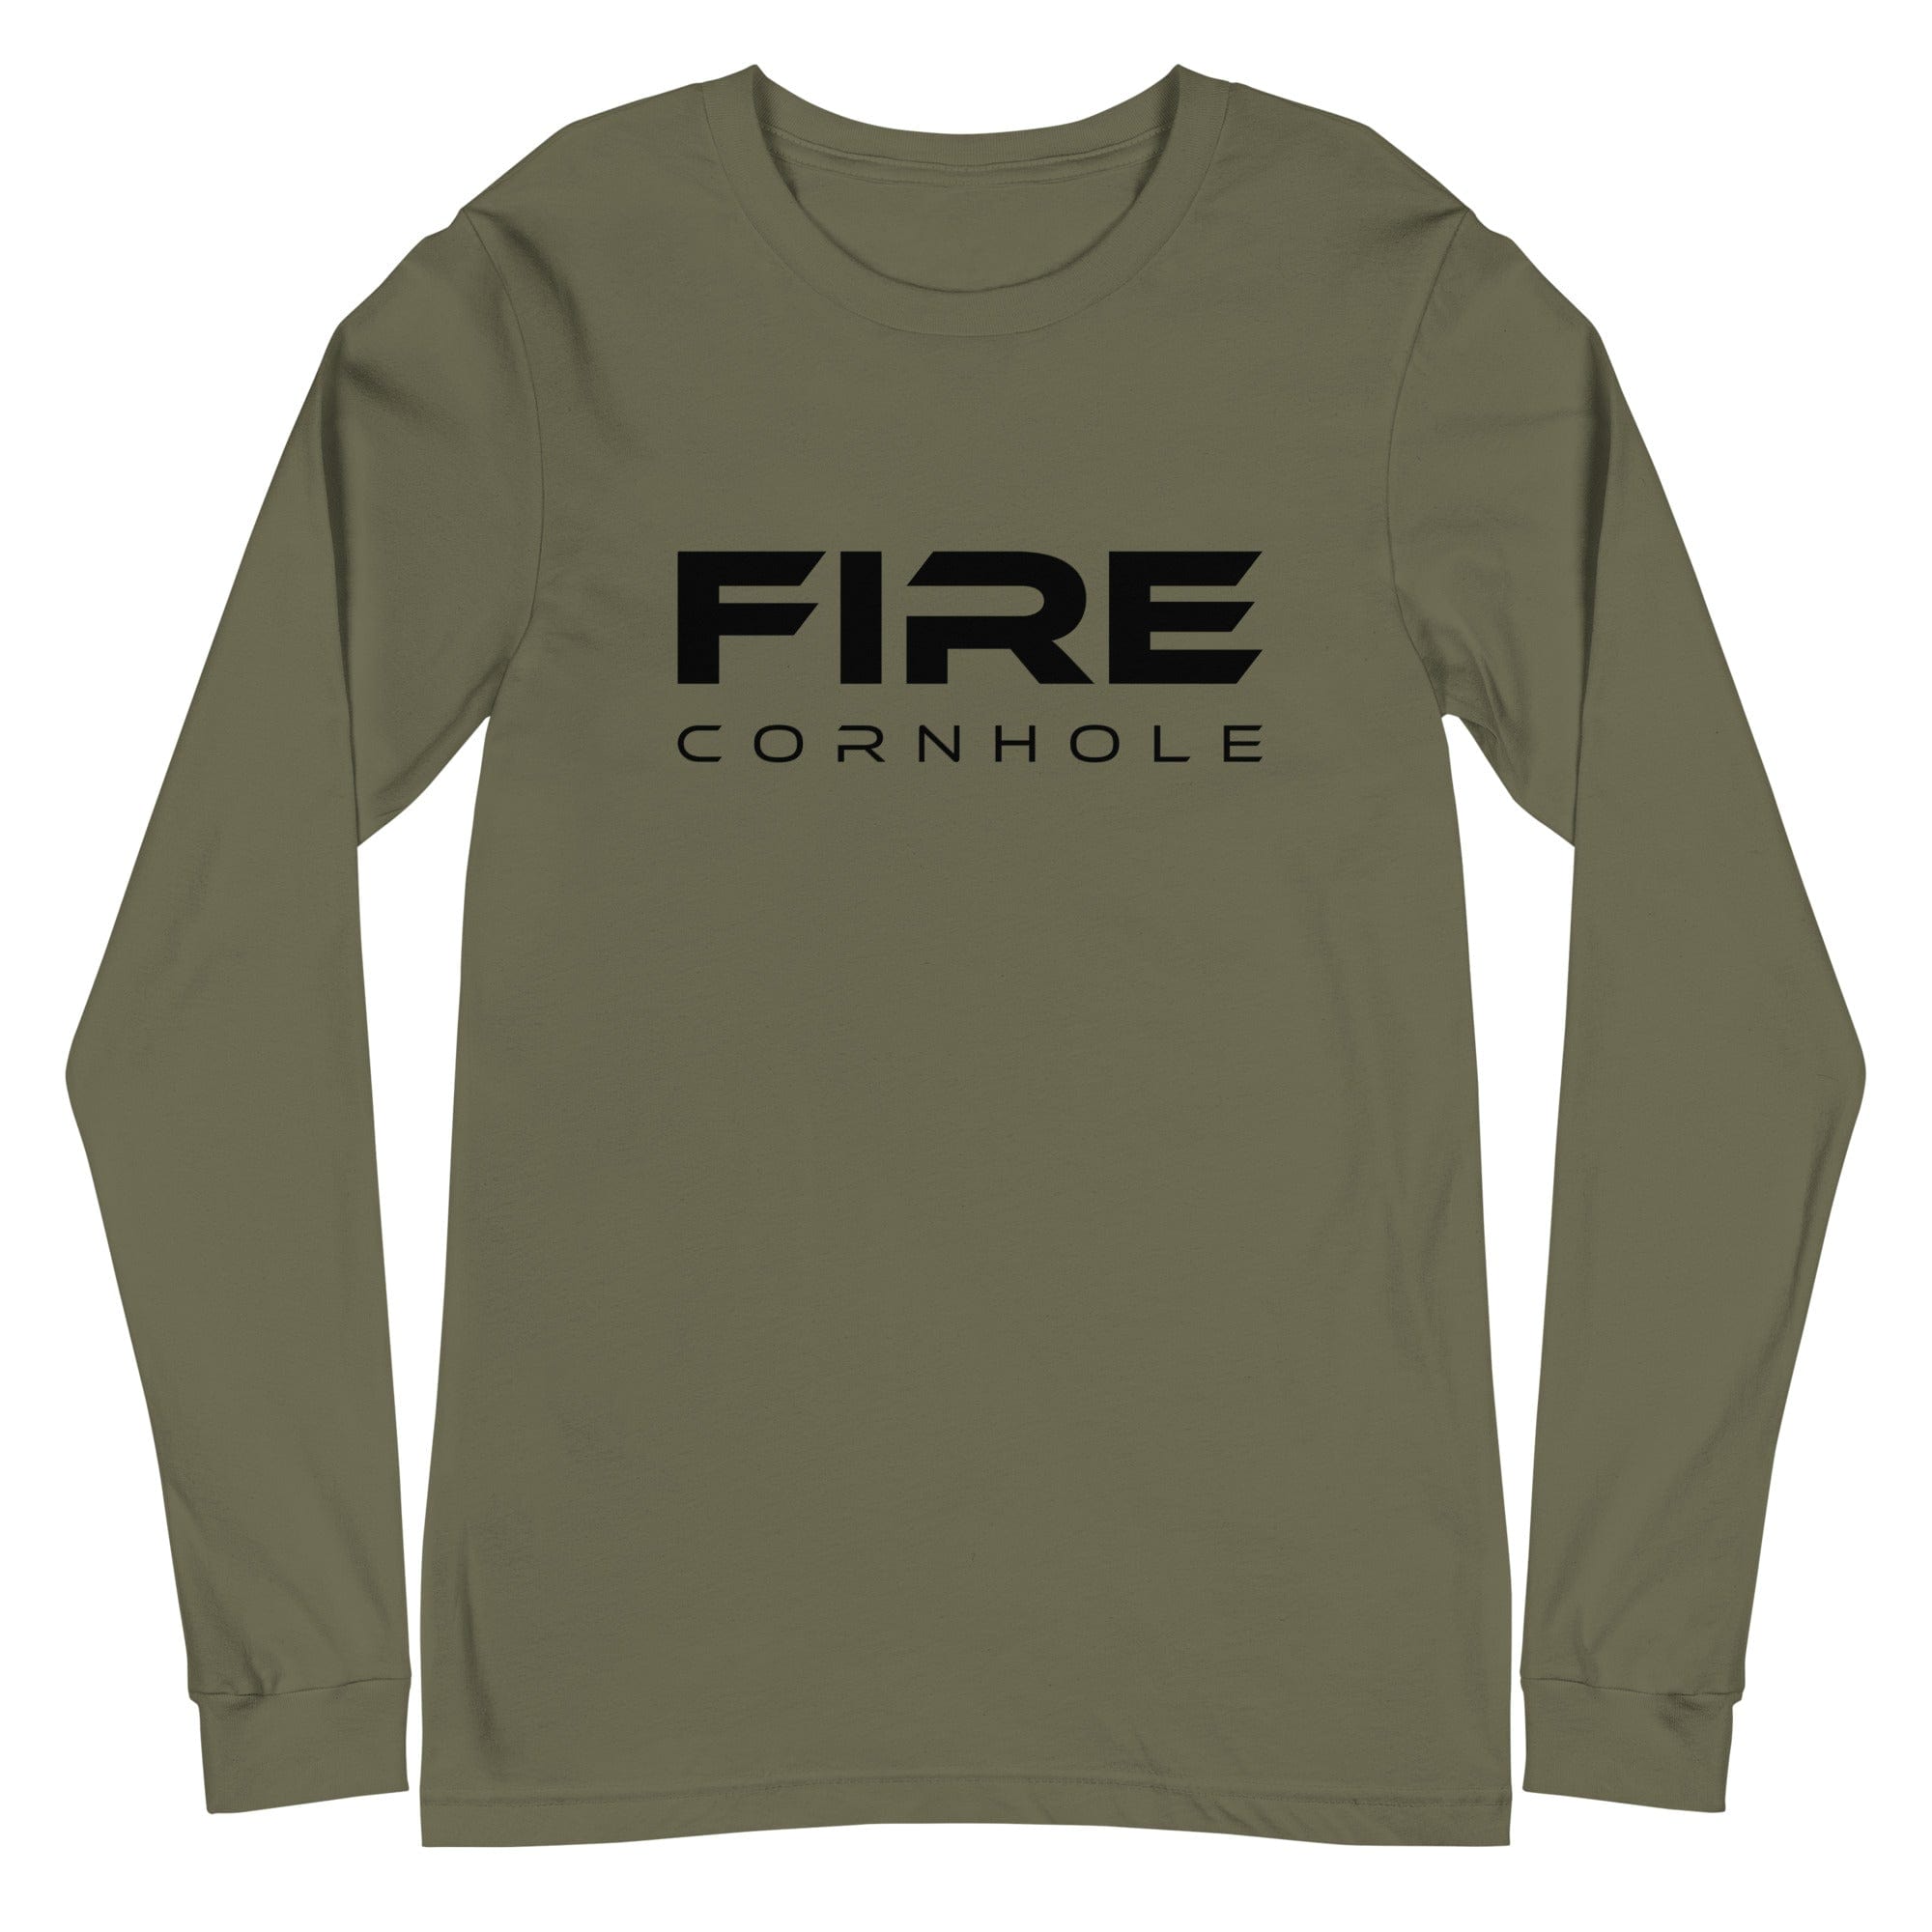 Army green unisex cotton longsleeve shirt with Fire Cornhole logo in black